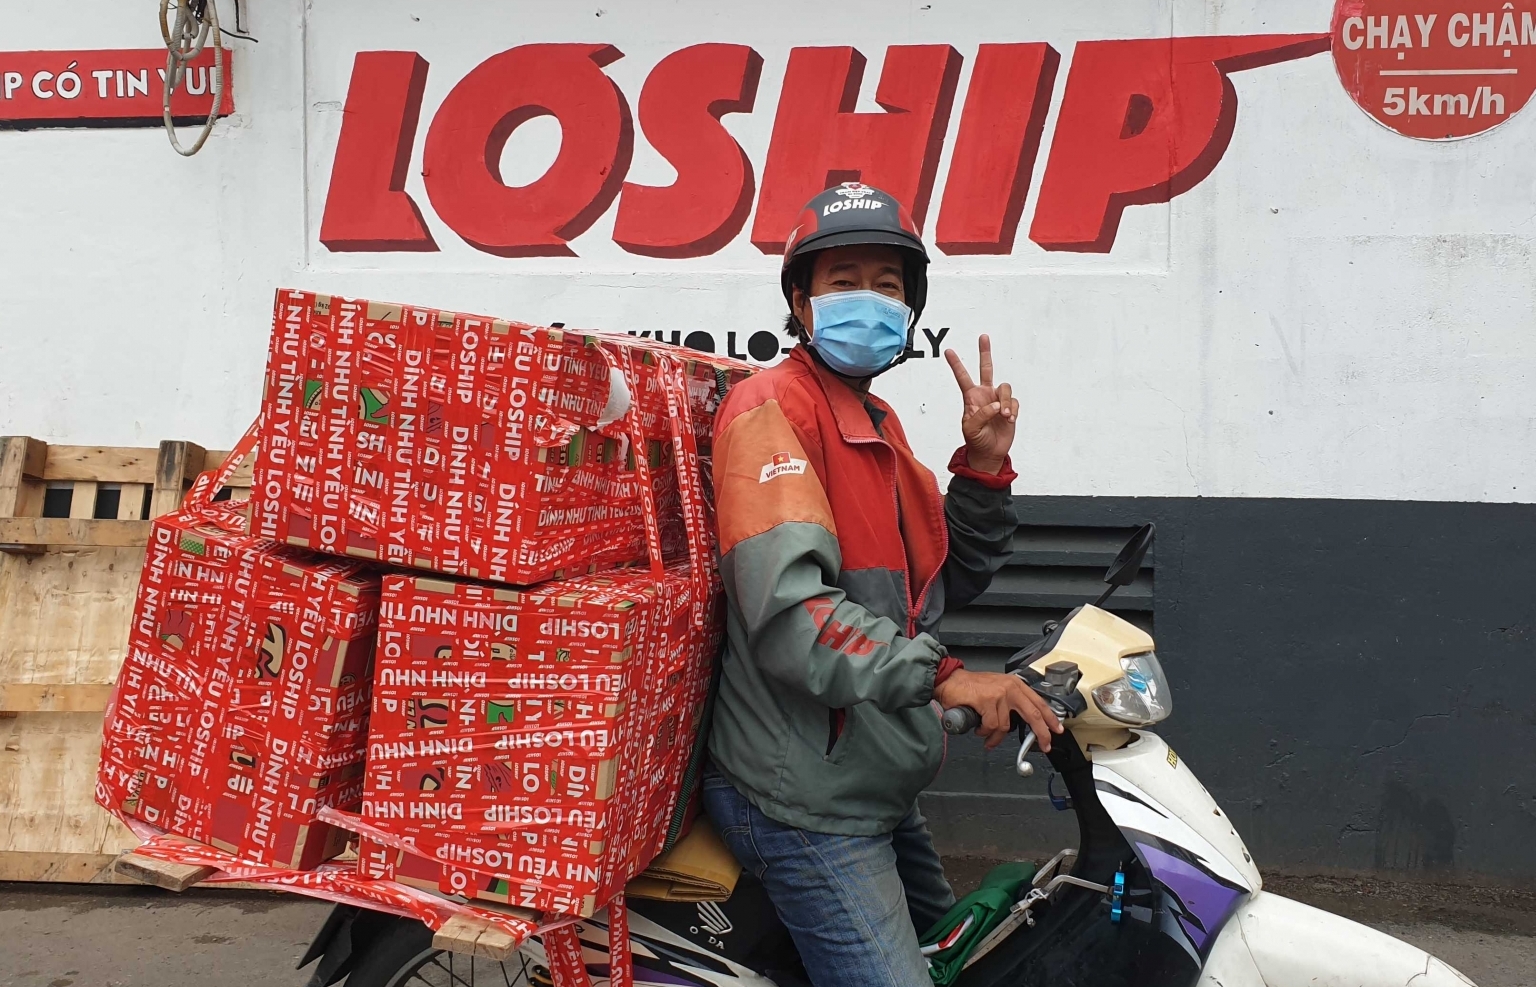 Loship bags $12 million in pre-series C funding round